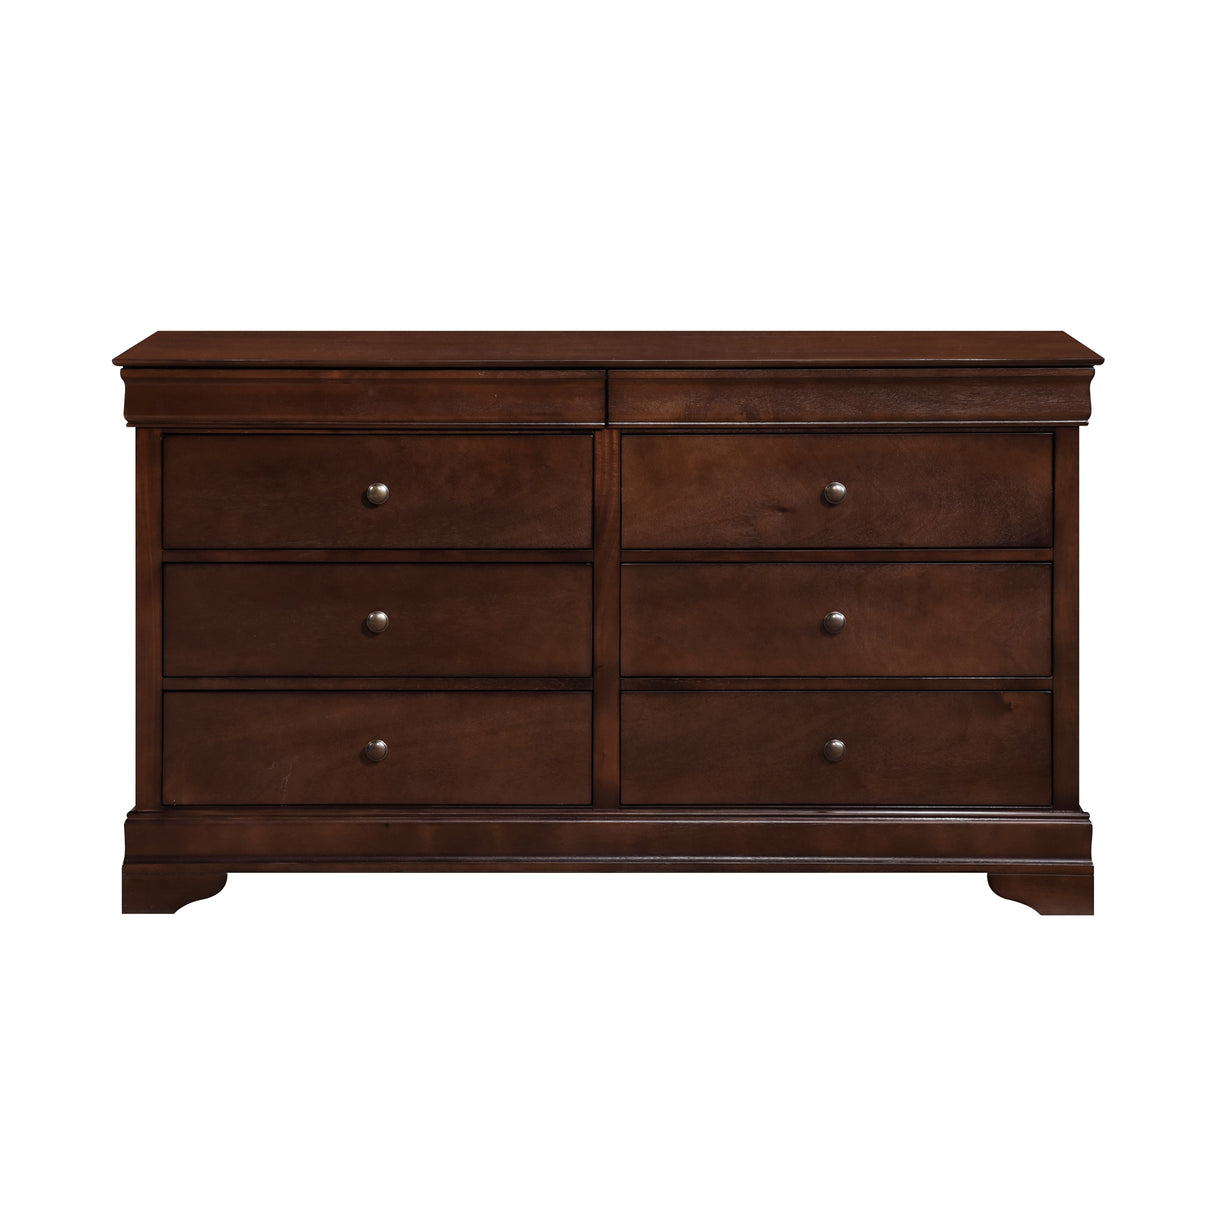 1856-5 Dresser, Two Hidden Drawers - Luna Furniture